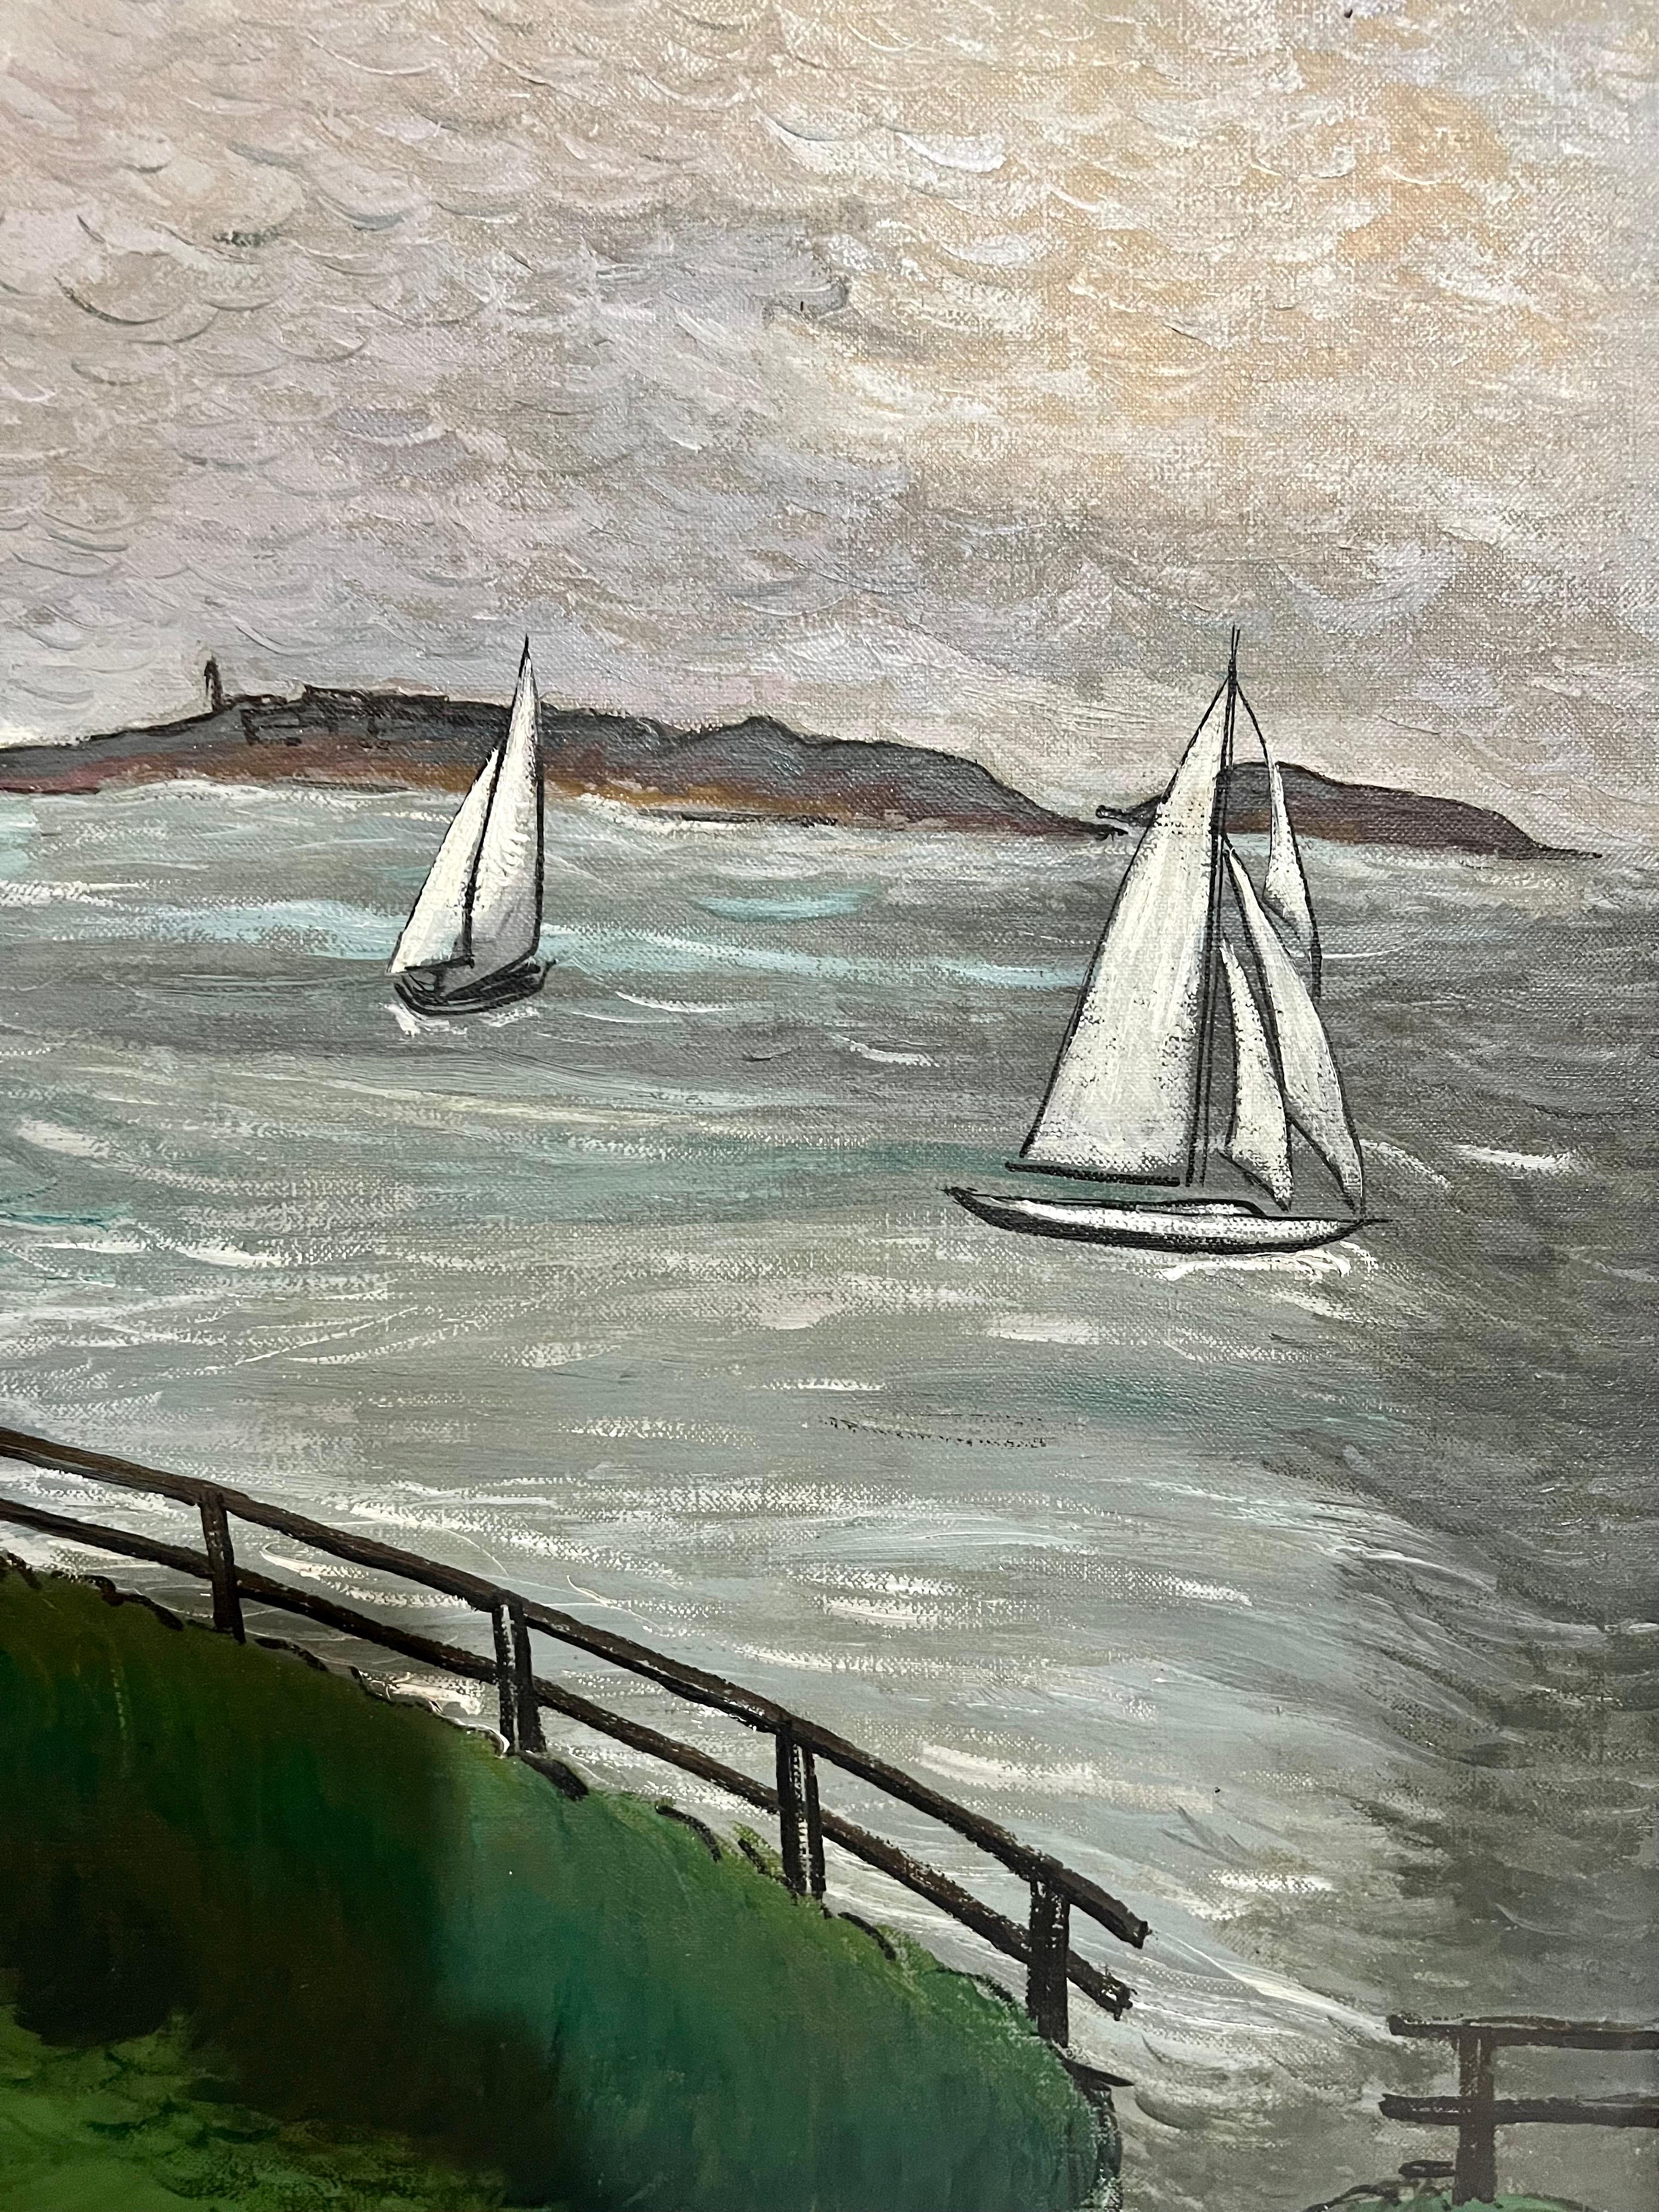 1930 Oil Painting Sea Side Sailboats American Modernist WPA Artist Morris Kantor For Sale 2